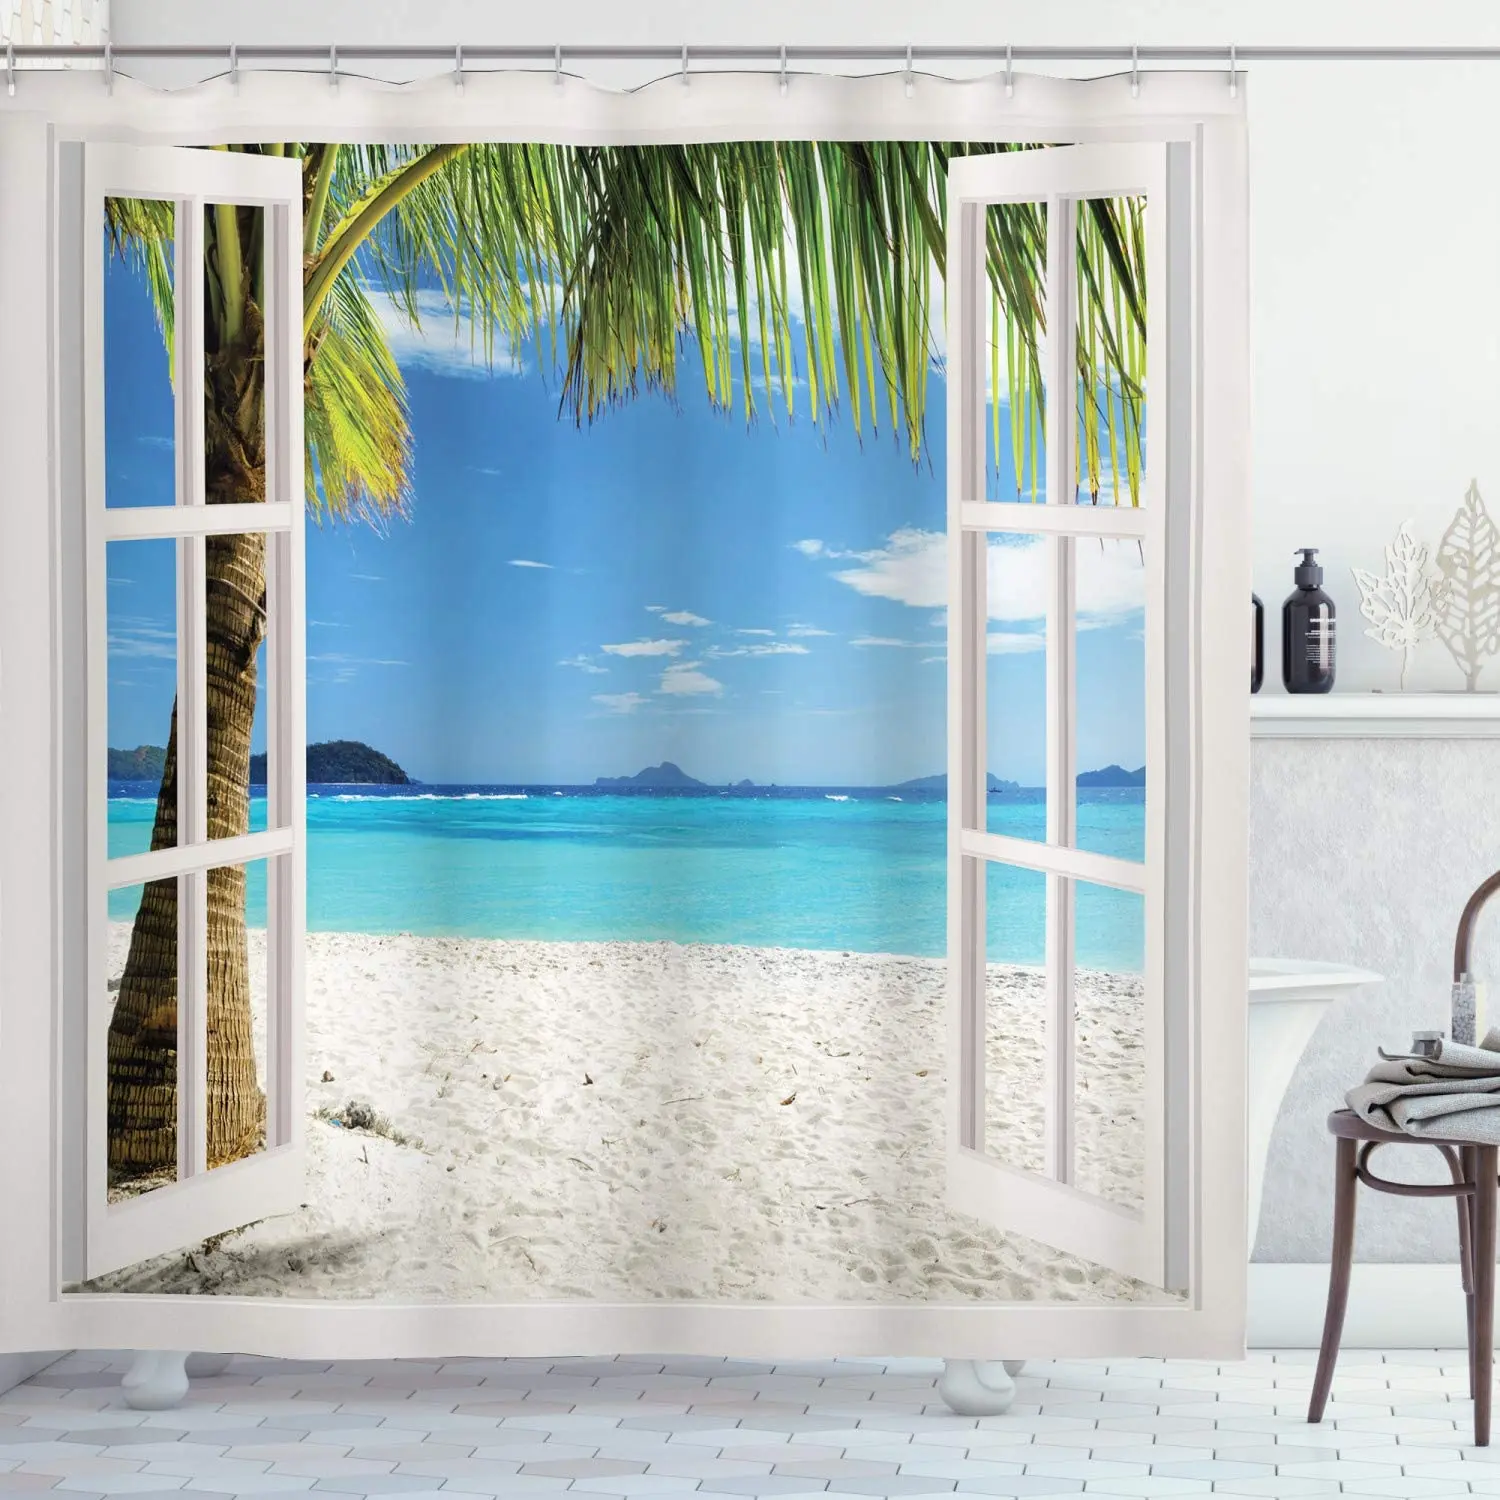 

Turquoise Shower Curtain Tropical Palm Trees Island Ocean Beach White Wooden Windows Fabric Bathroom Decor with Hooks Blue Green